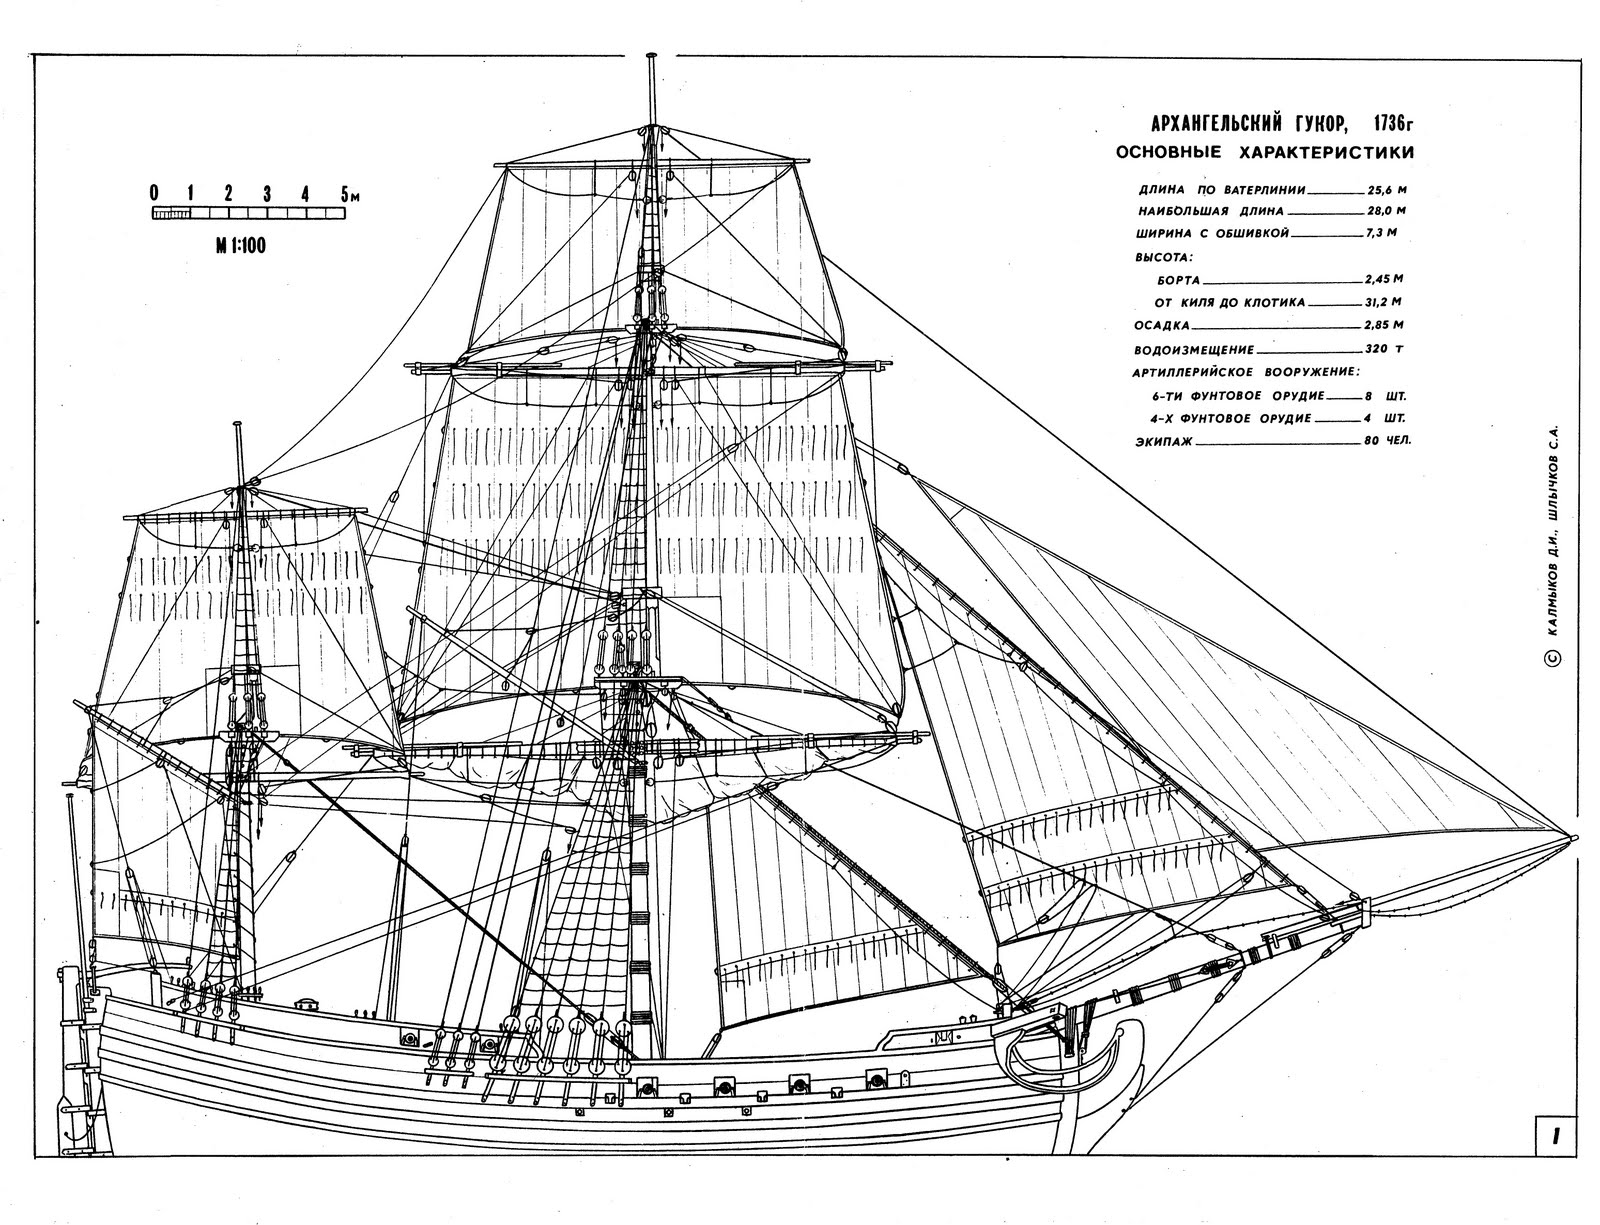 wood ship model plans plans free pdf download